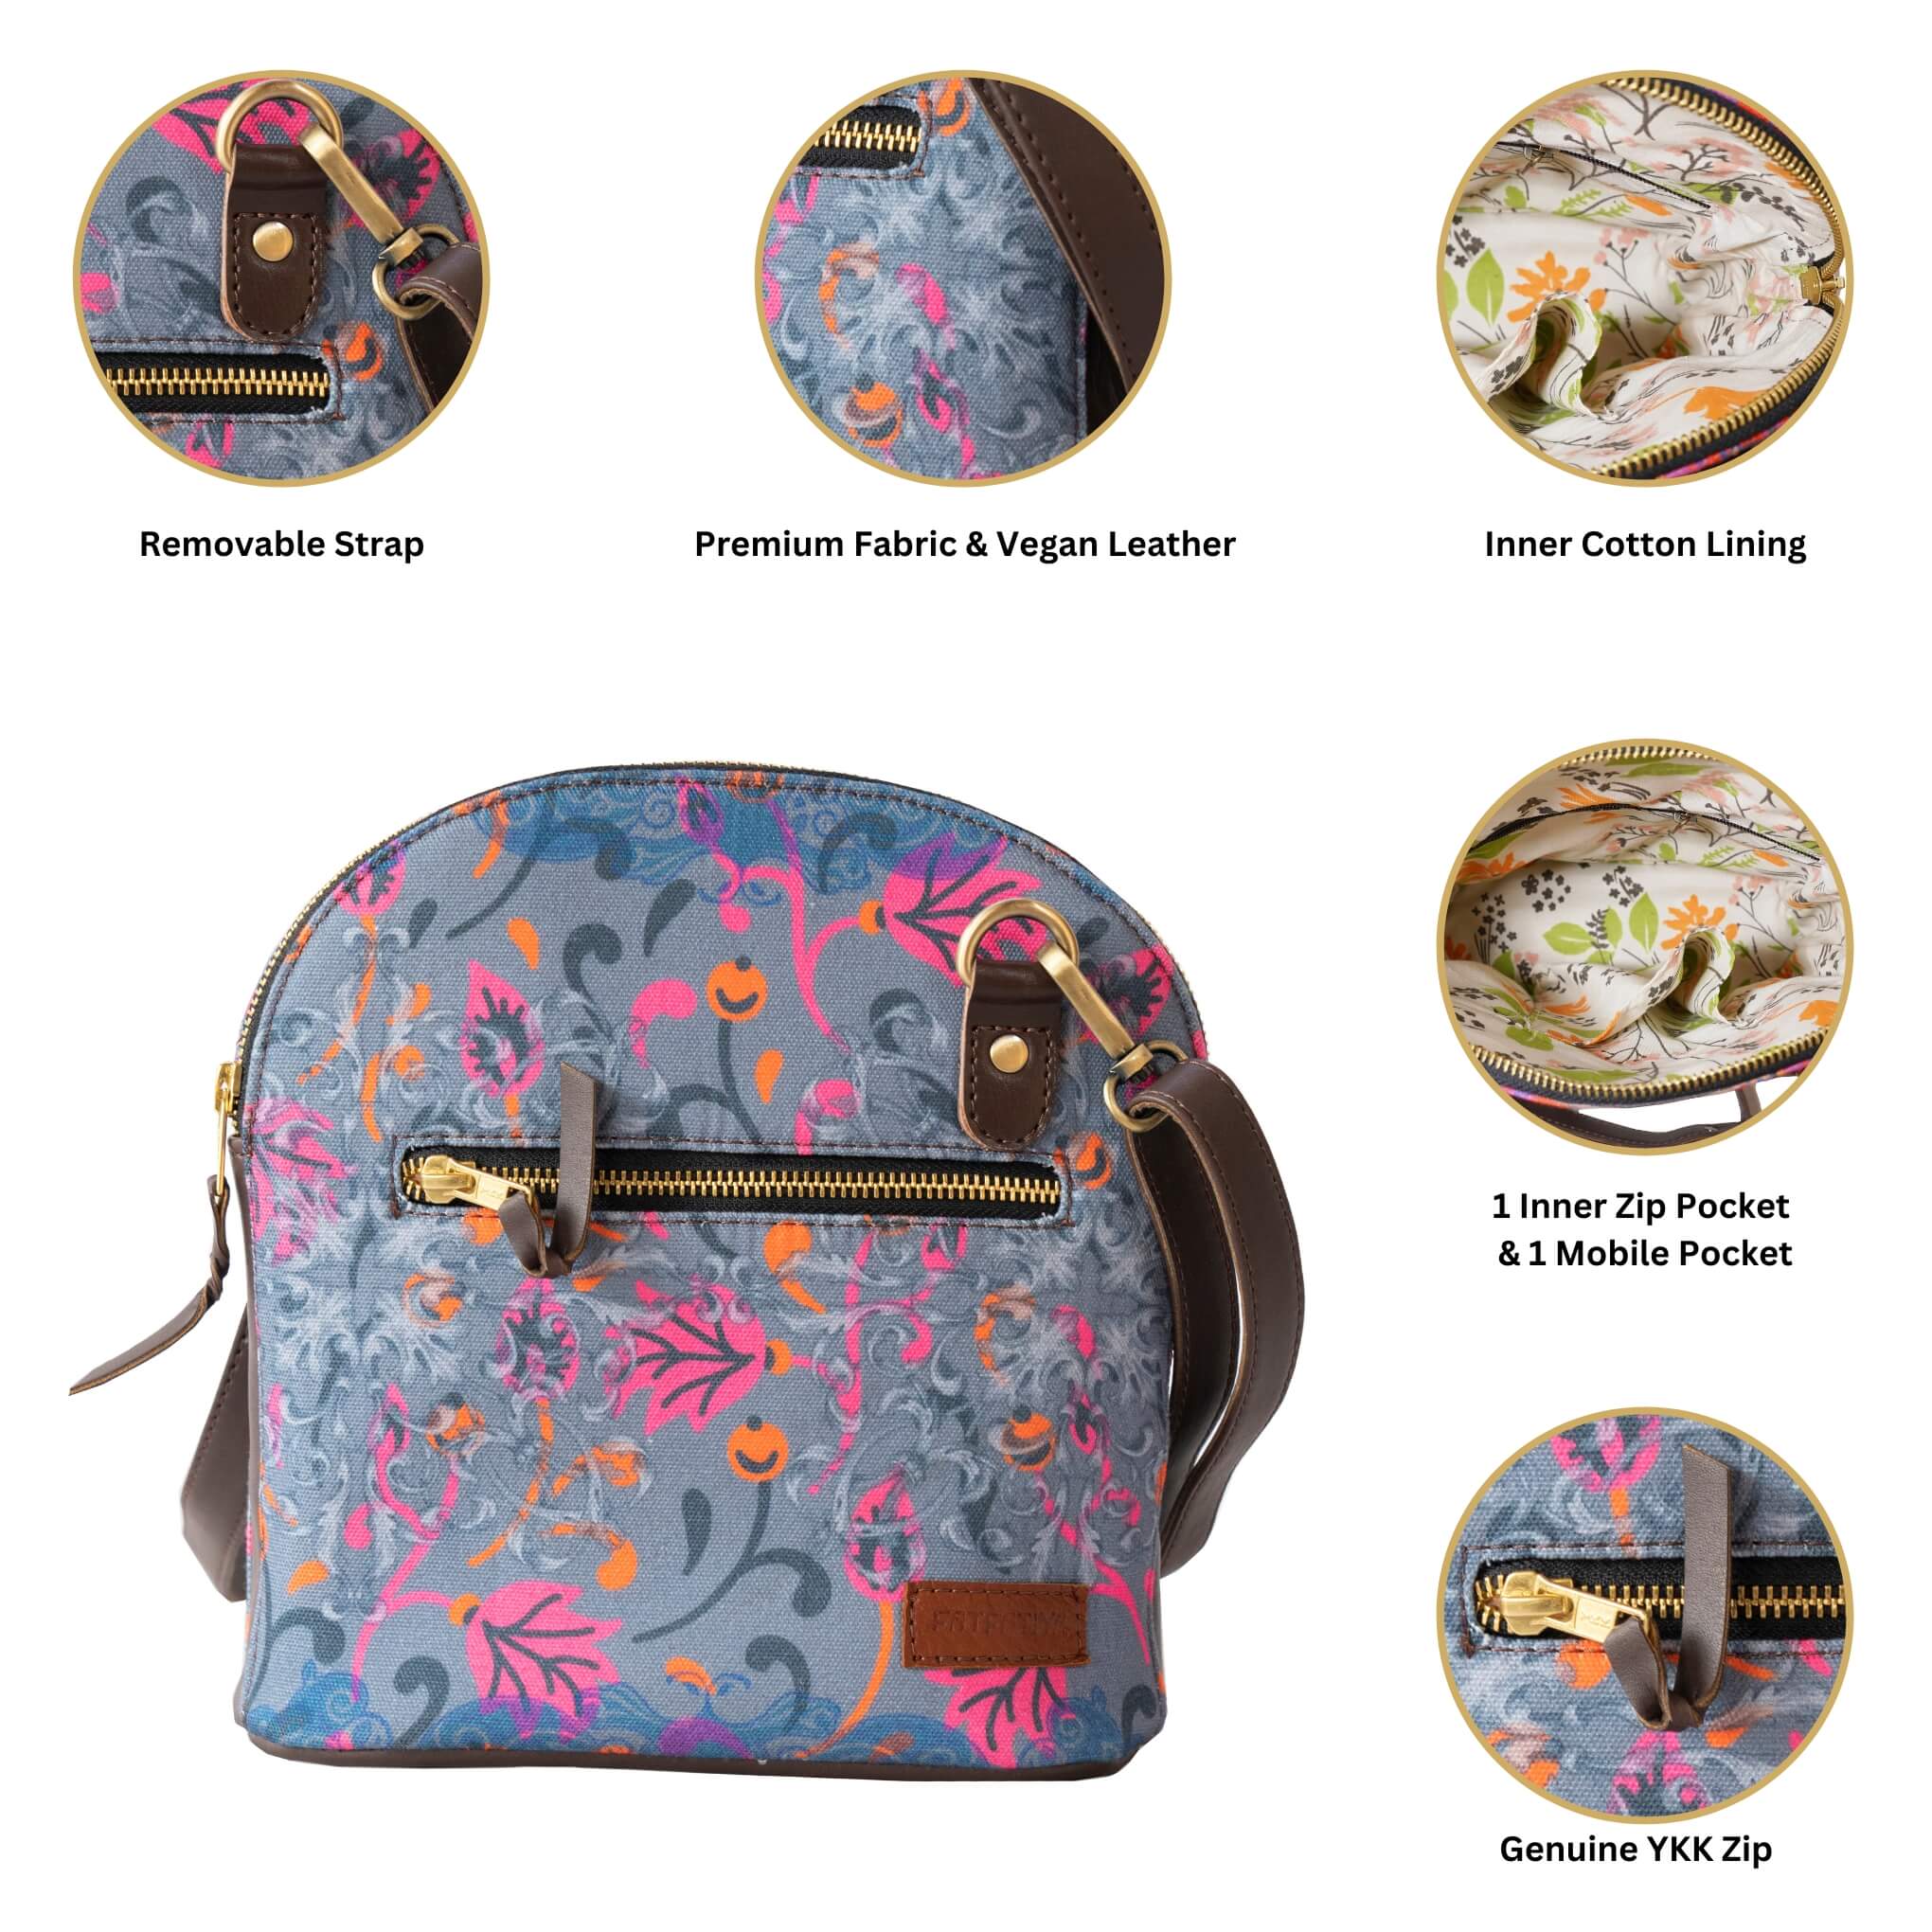 2 Zipper- Handbag cutting and stitching | Bag making at home | Tote bag -  YouTube